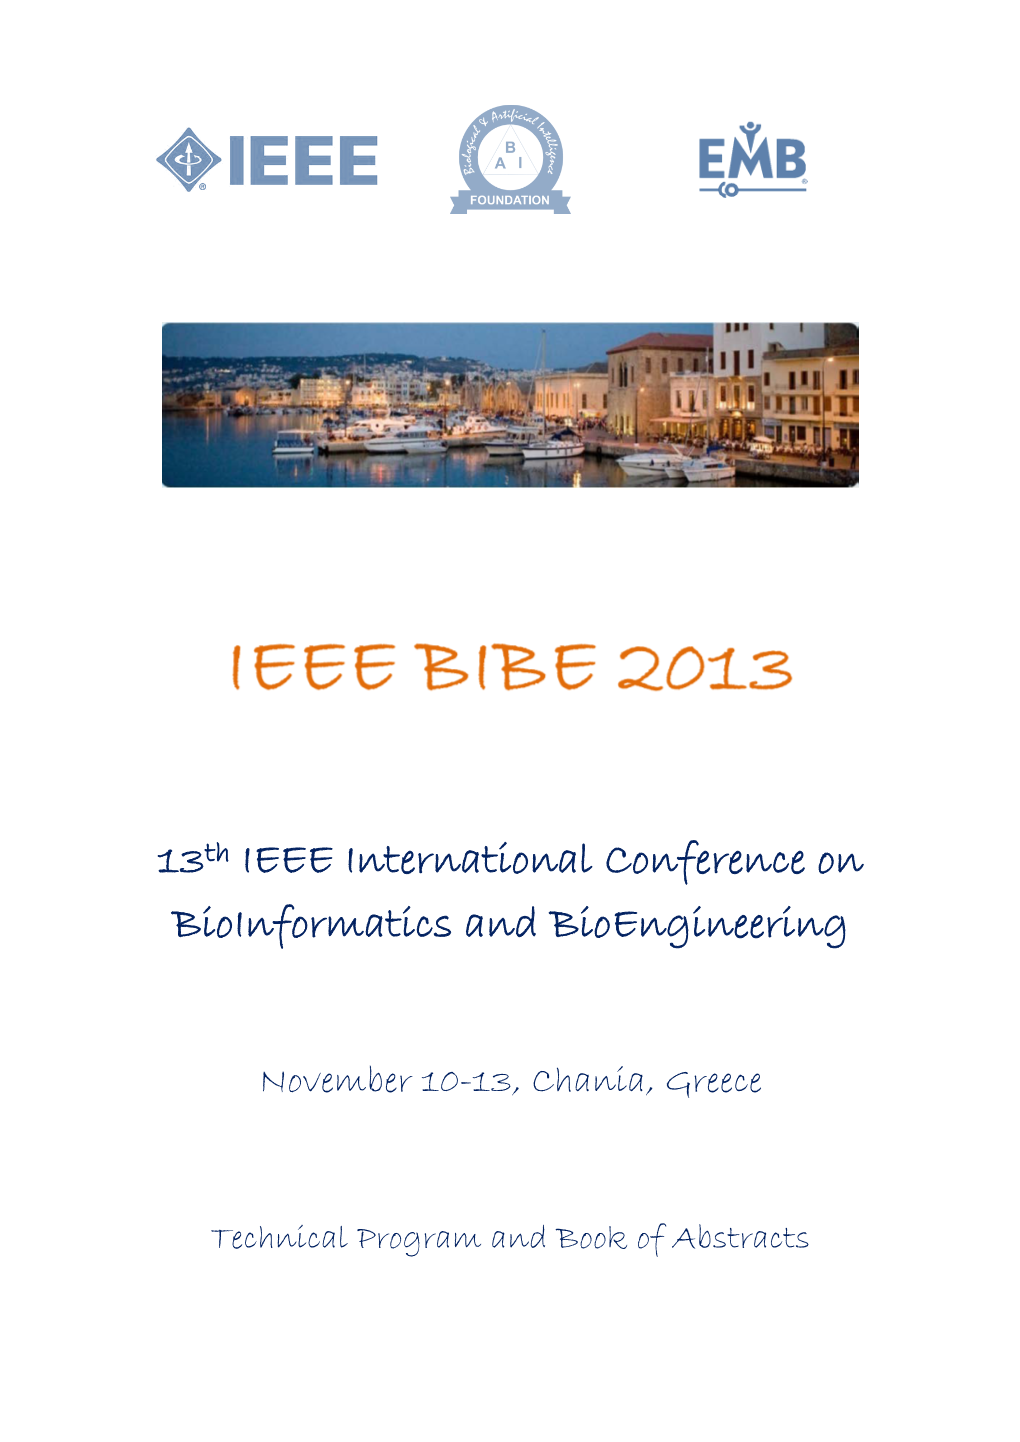 13Th IEEE International Conference on Bioinformatics and Bioengineering